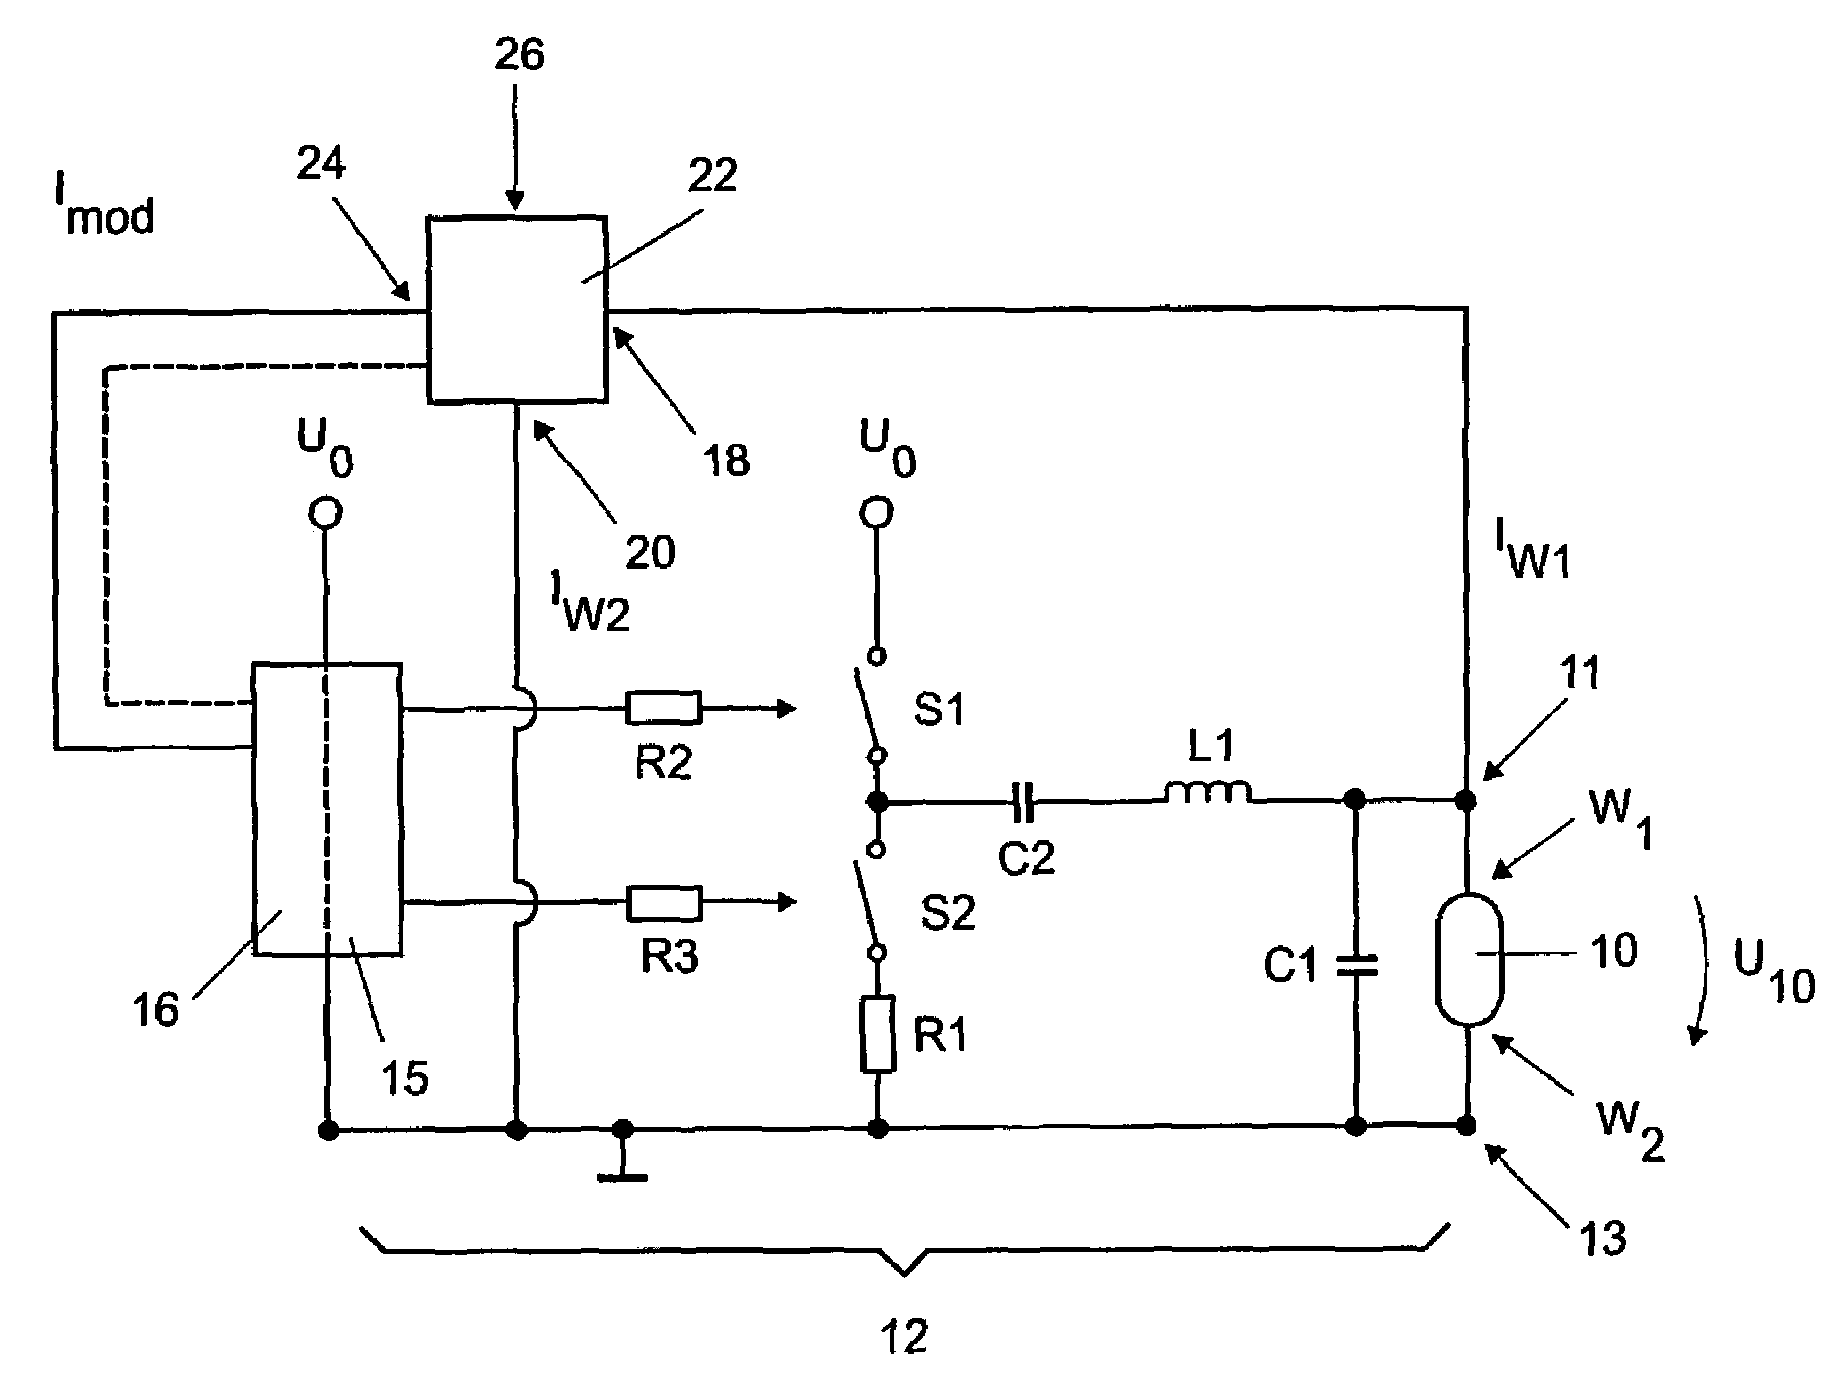 Circuit arrangement having protective circuit and modification apparatus